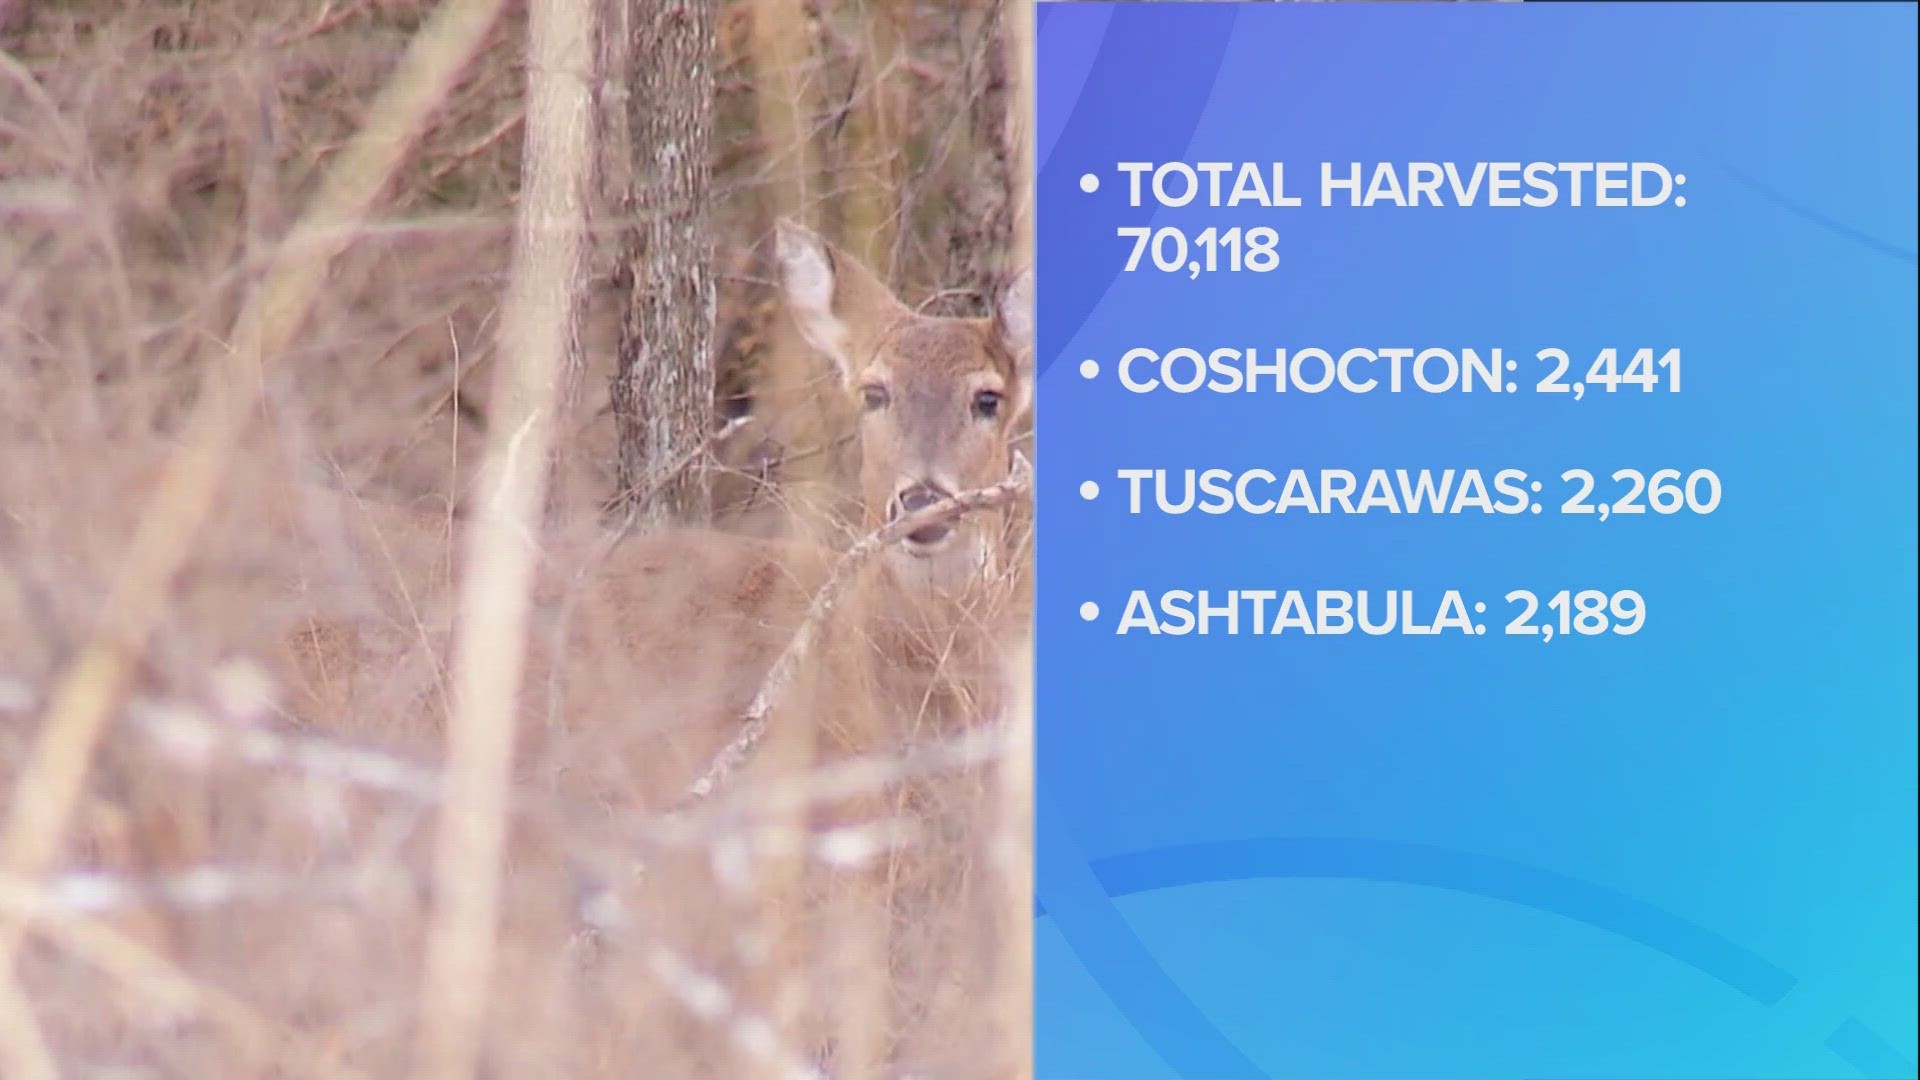 Ohio deer gun hunting season ends with over 70K harvests